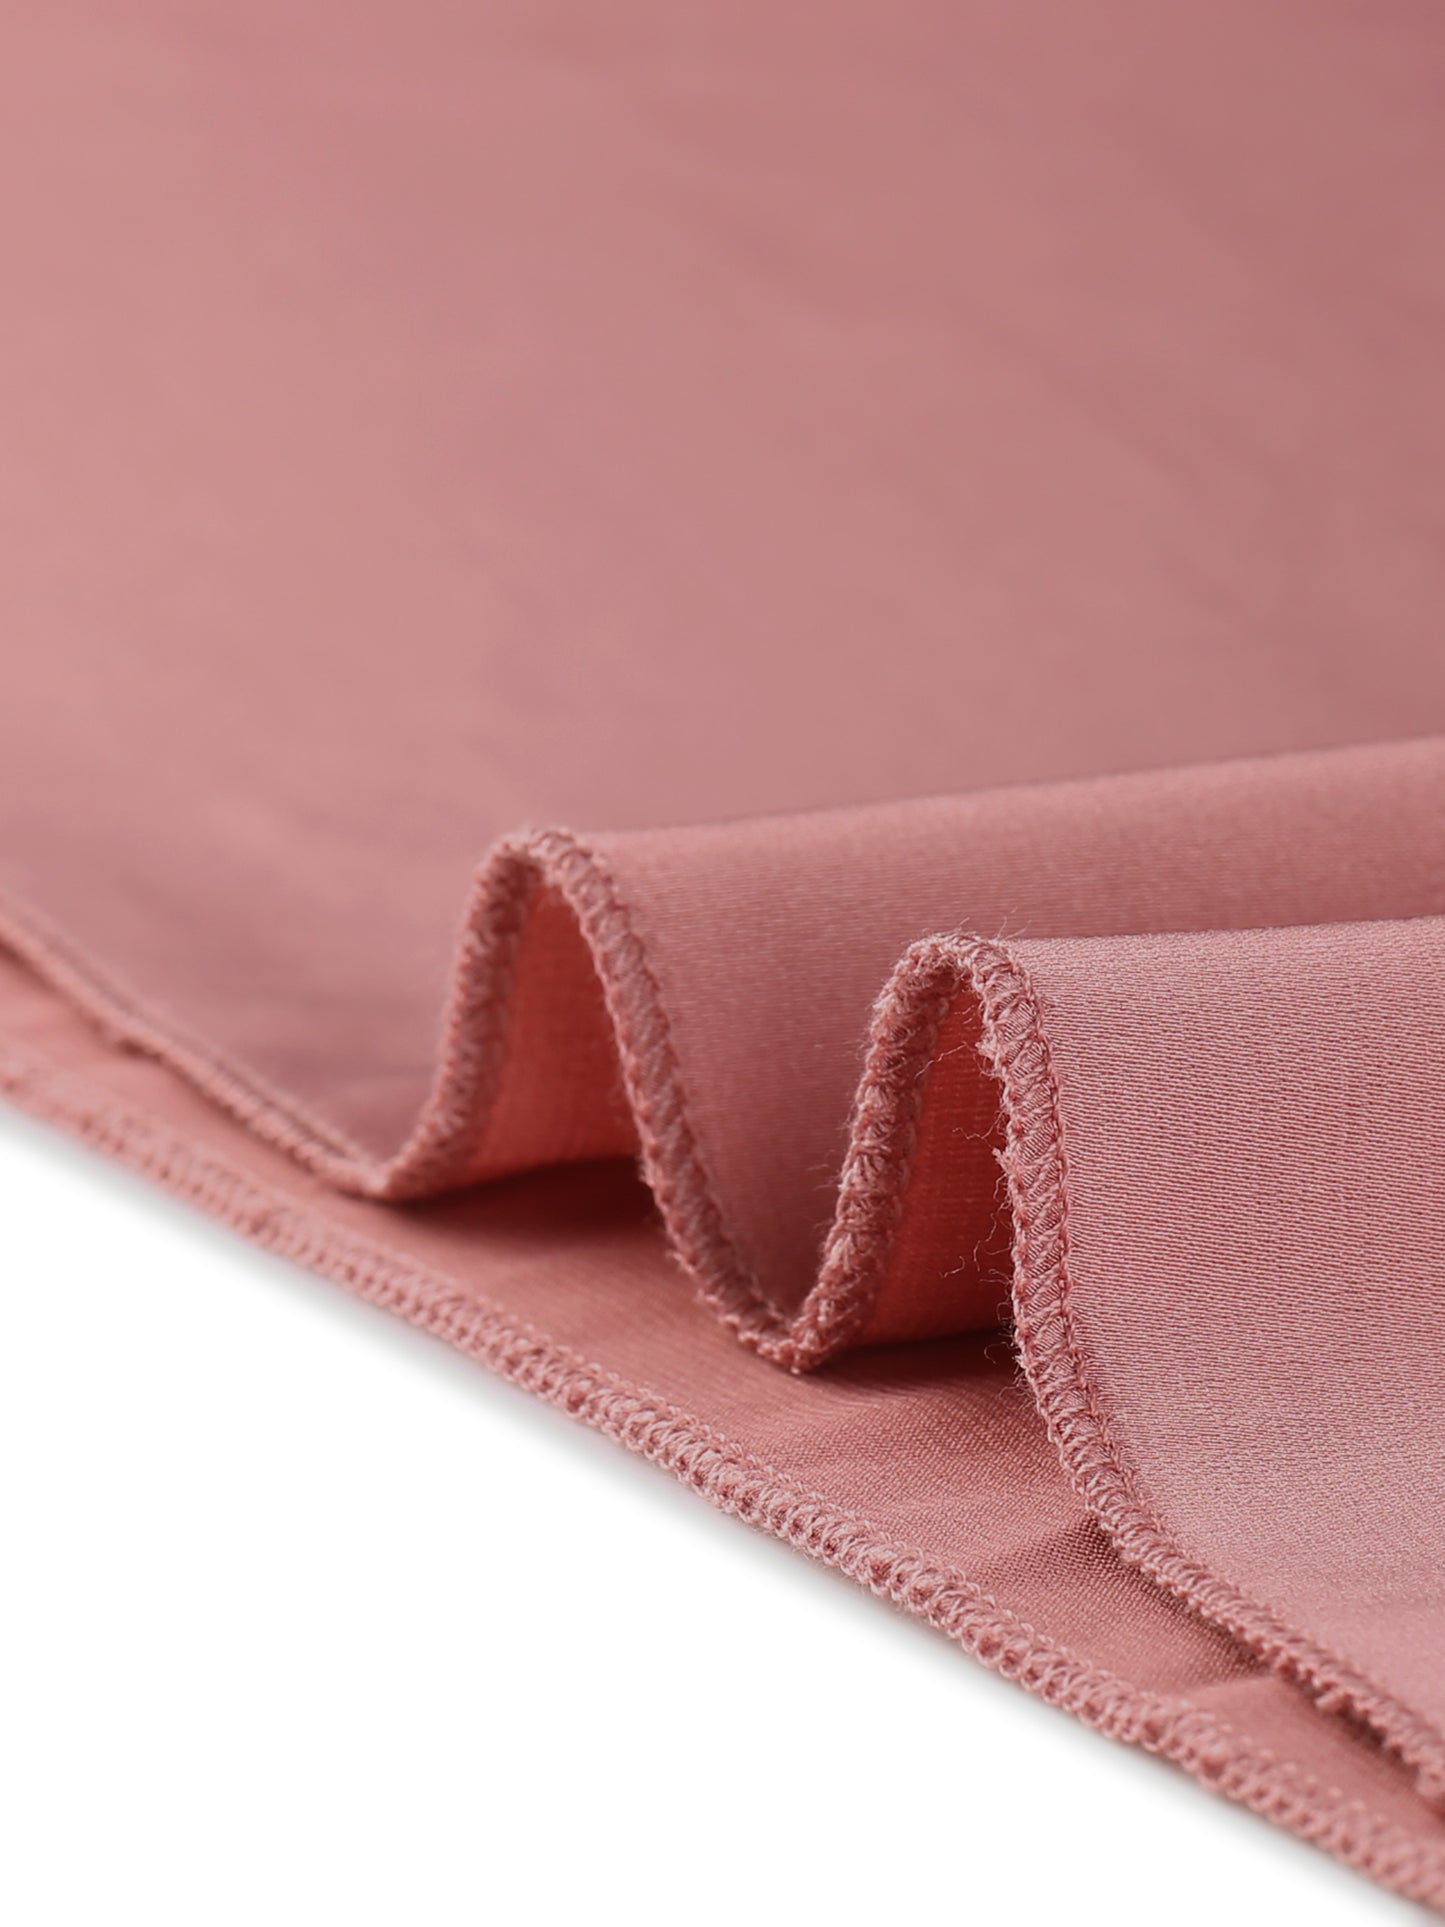 cheibear Satin Lingerie Lace Trim Cami Tops Shorts Sleepwear Pajamas Sets Lotus Pink